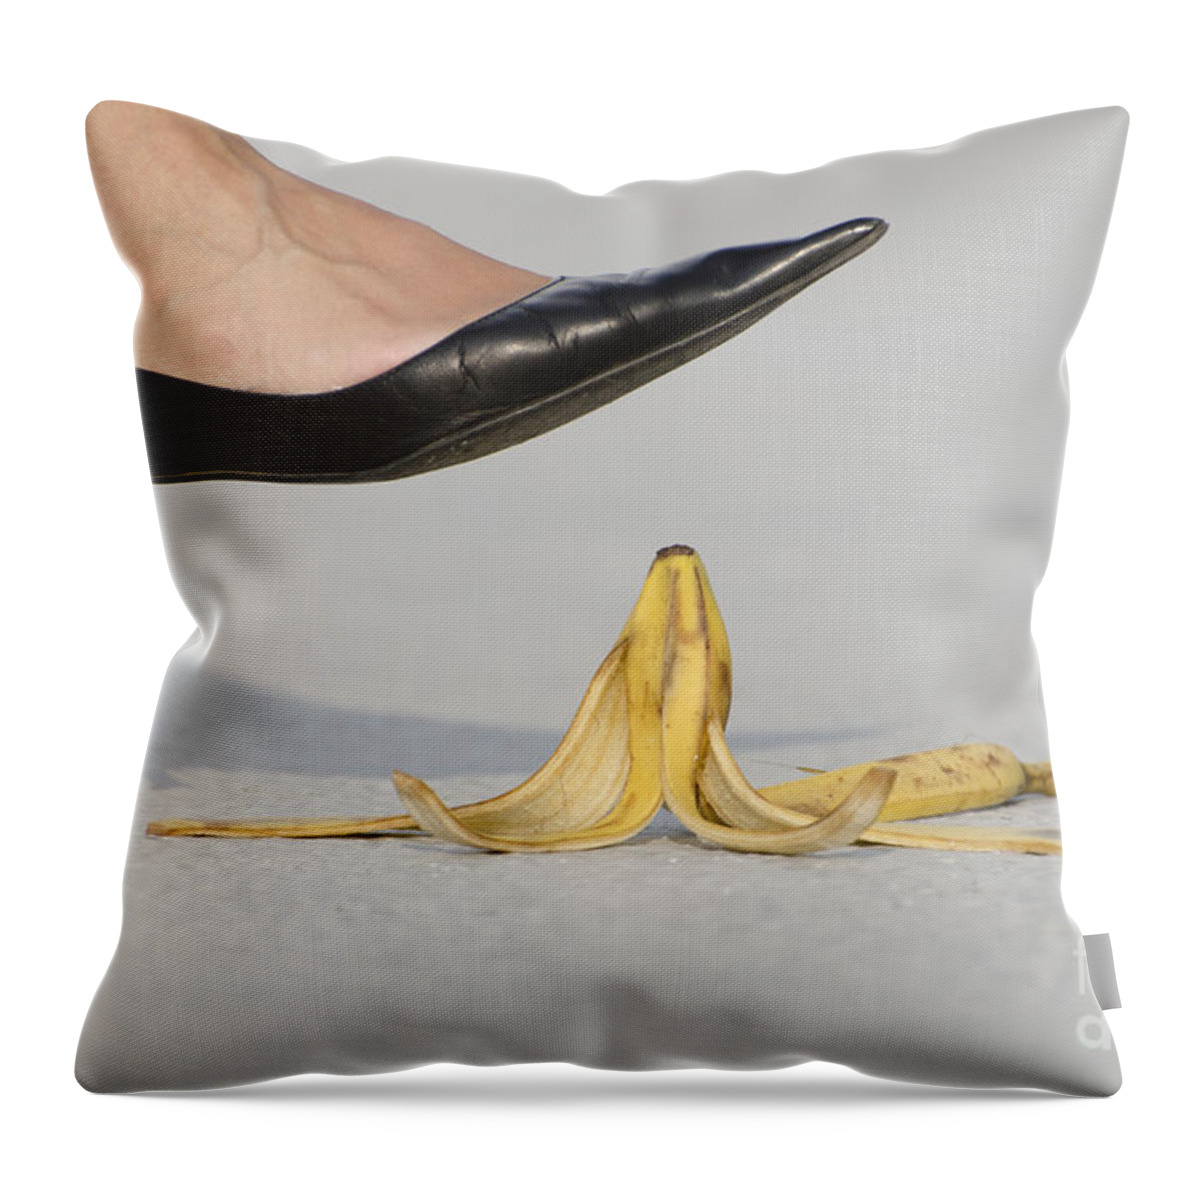 Banana Peel Throw Pillow featuring the photograph Walking on banana peel by Mats Silvan